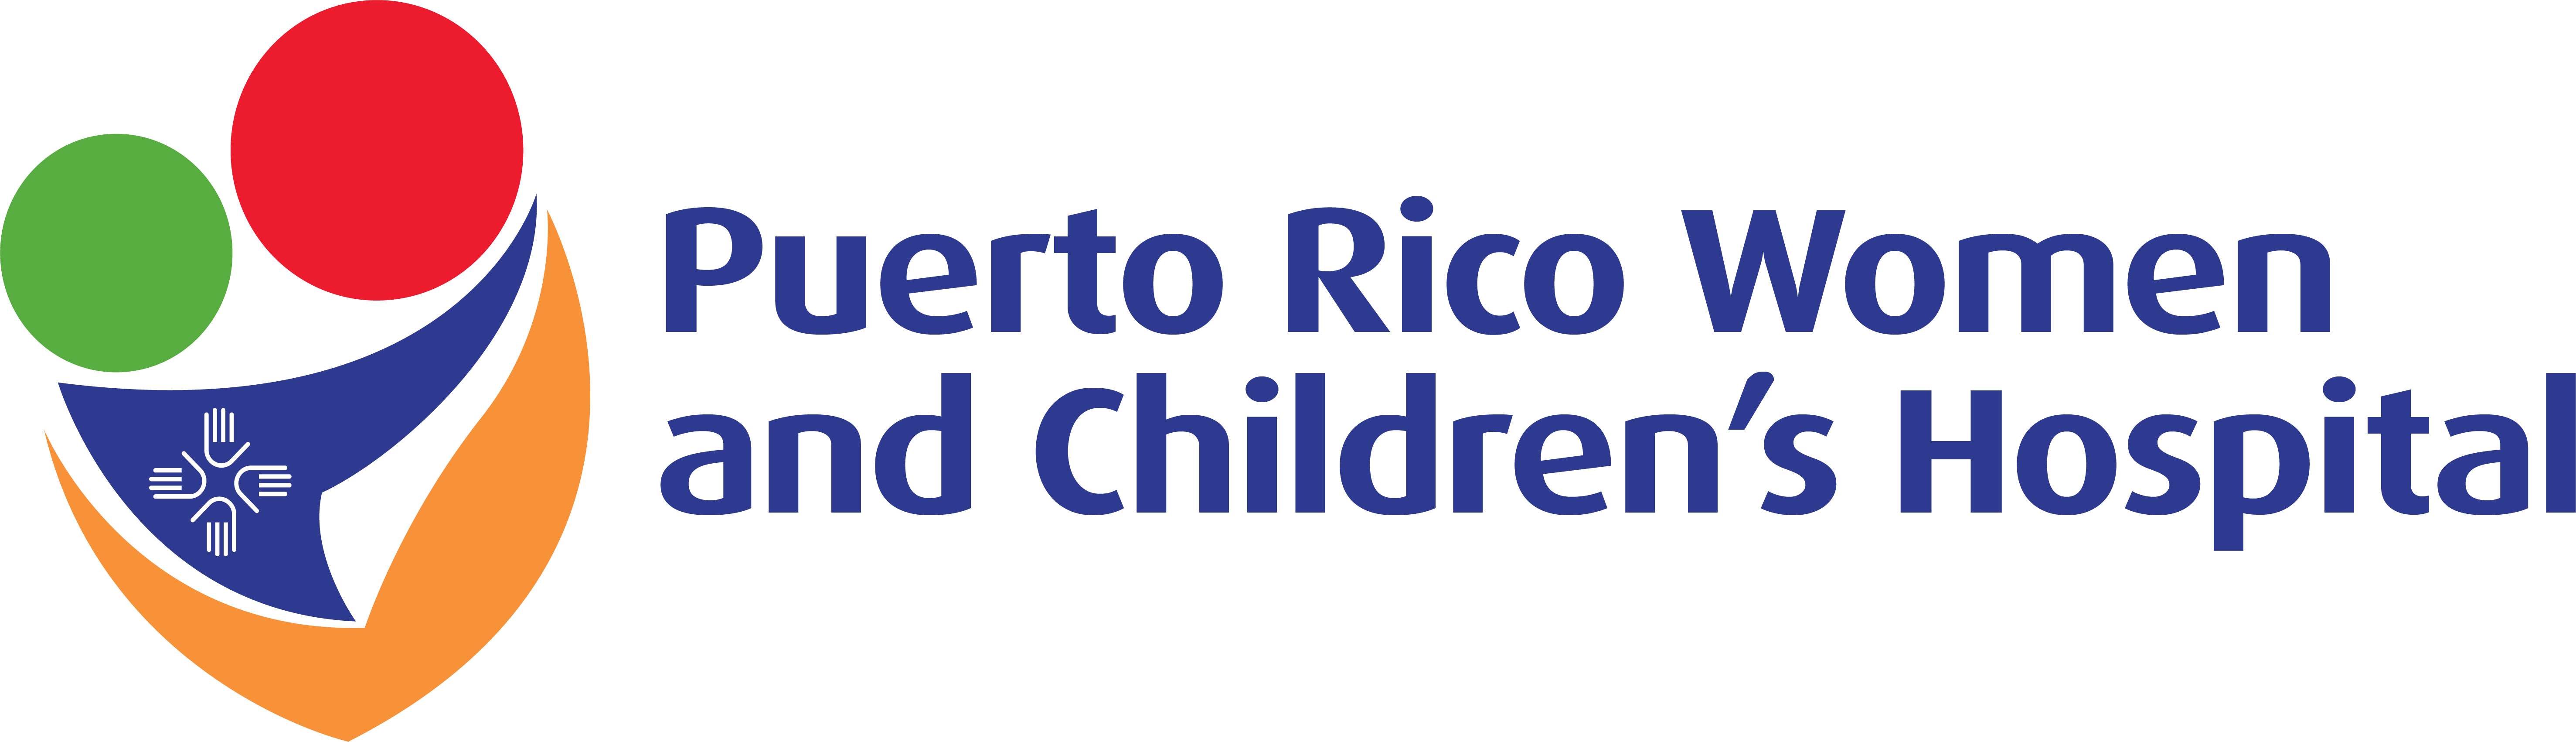 Puerto Rico Women and Children's Hospital